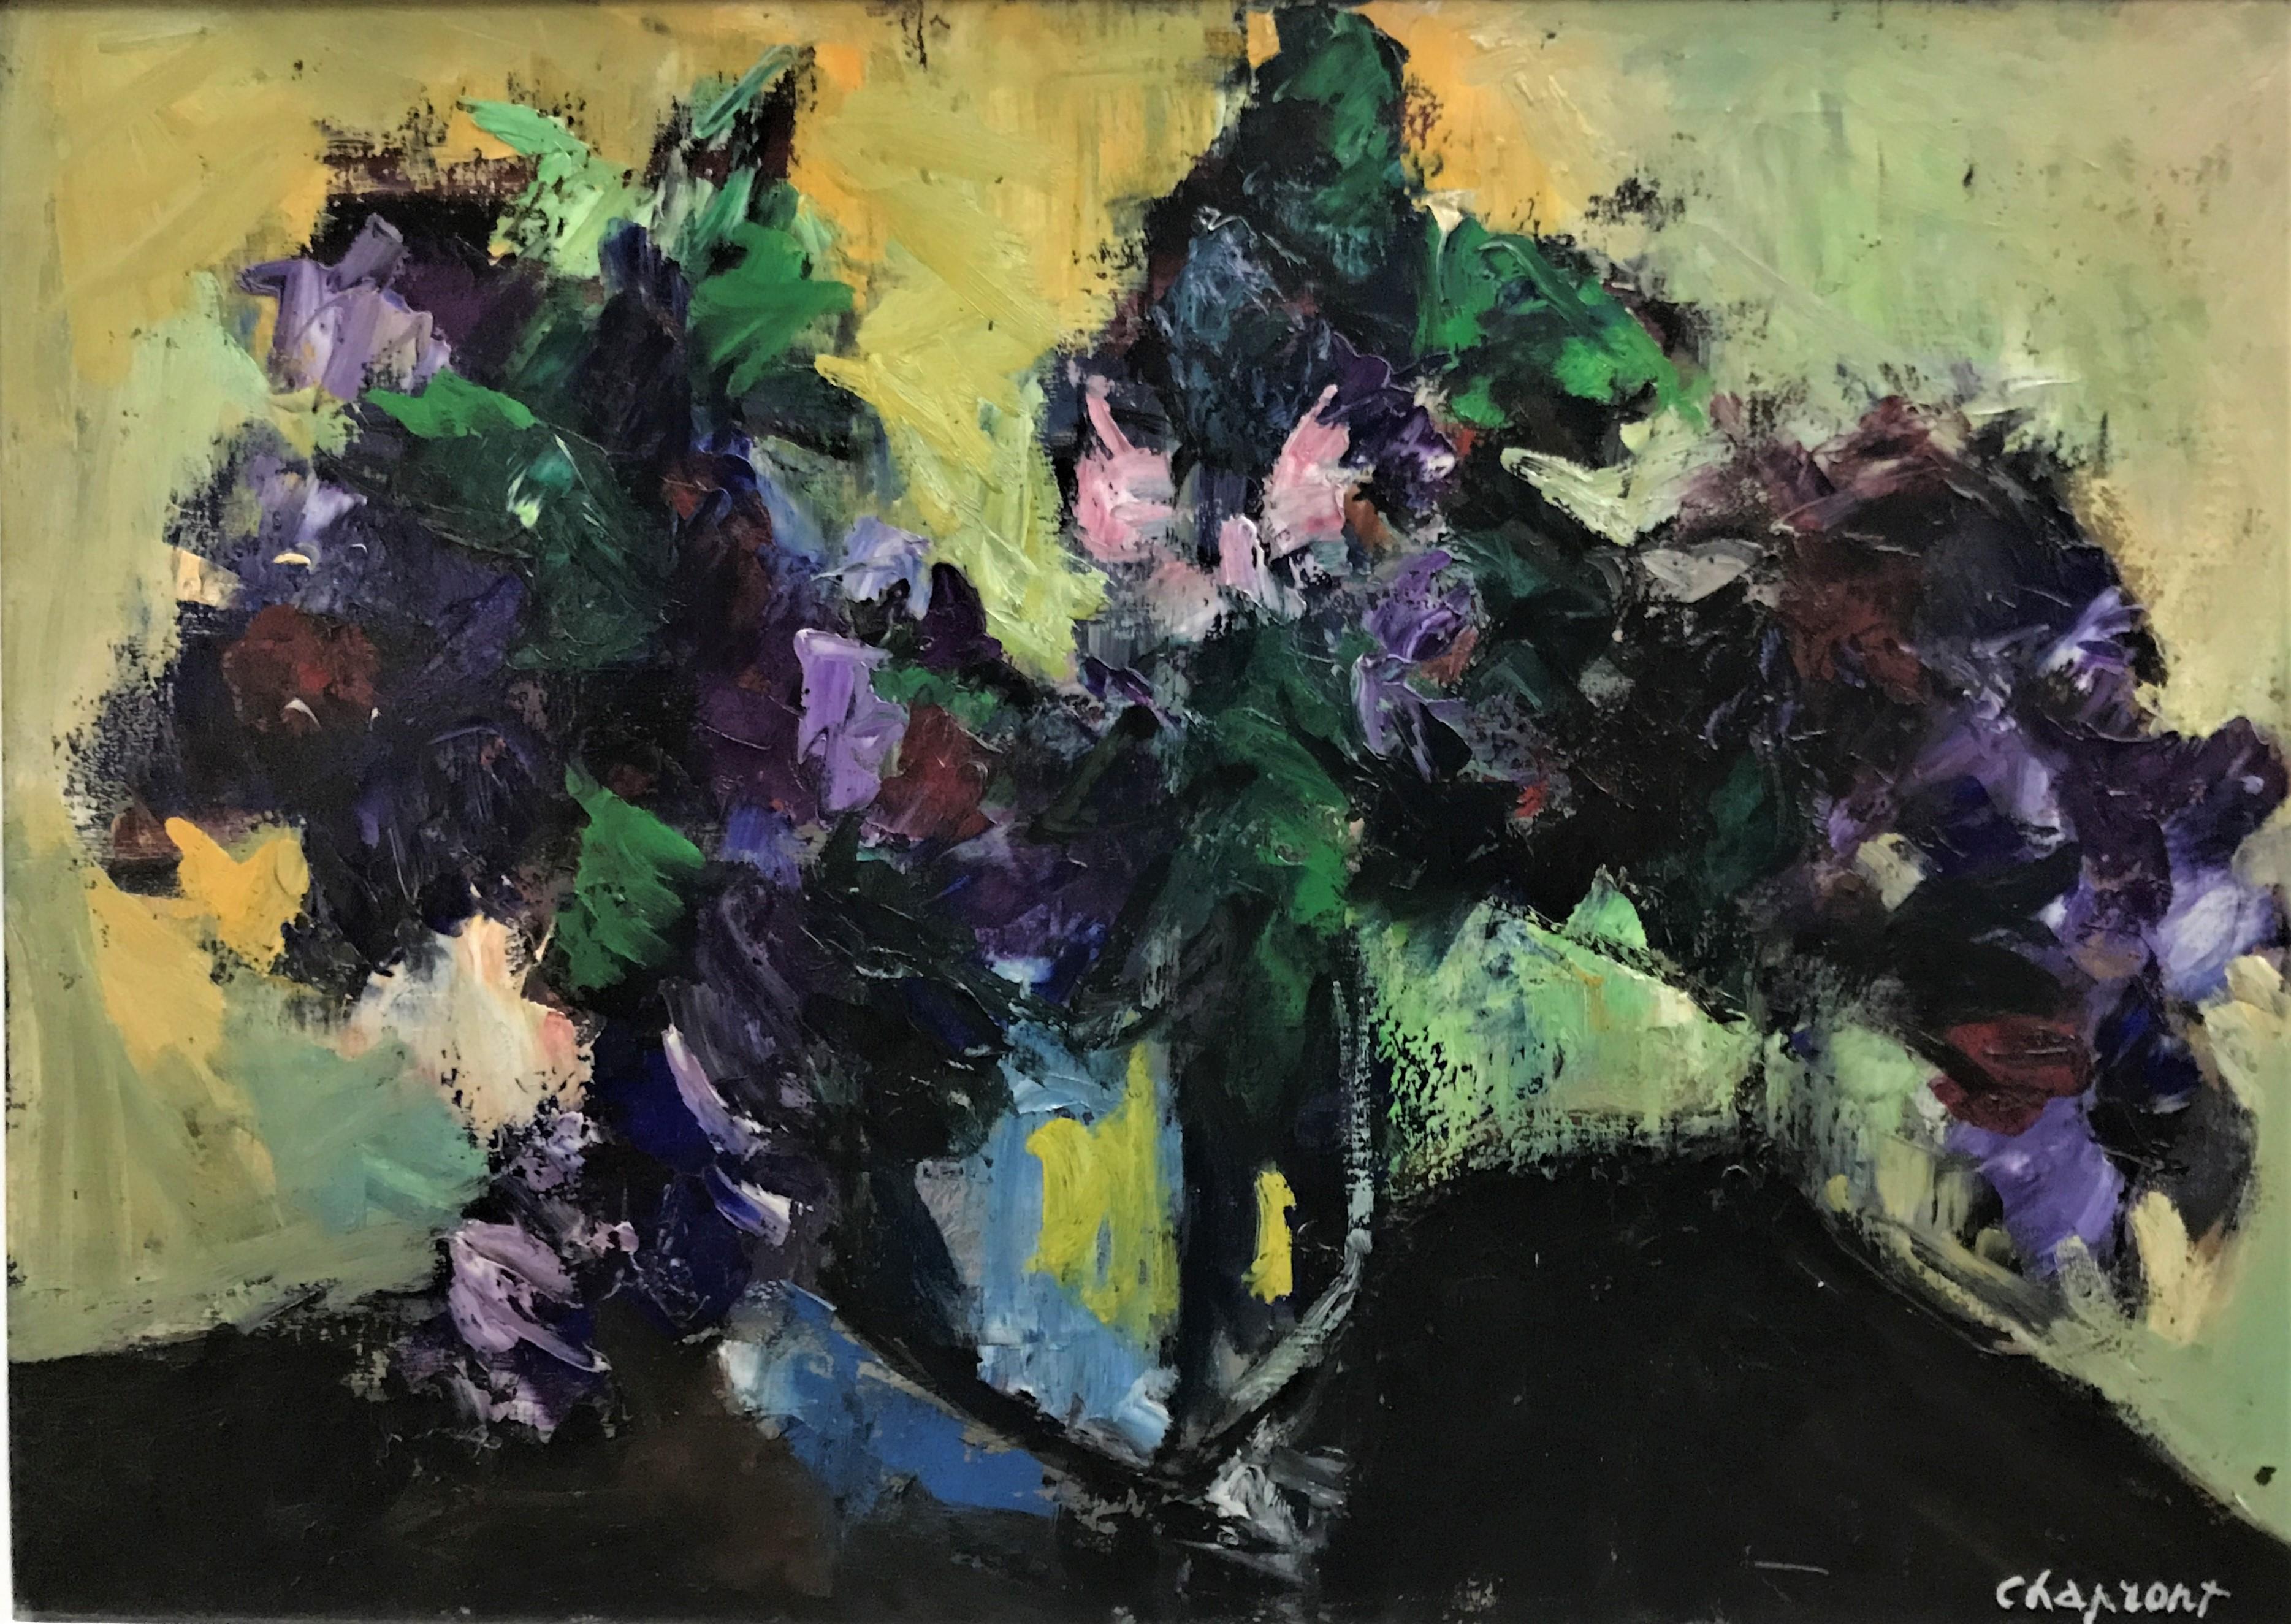  Bouquet of Flowers, Impressionist still life, original oil on canvas, 20thC